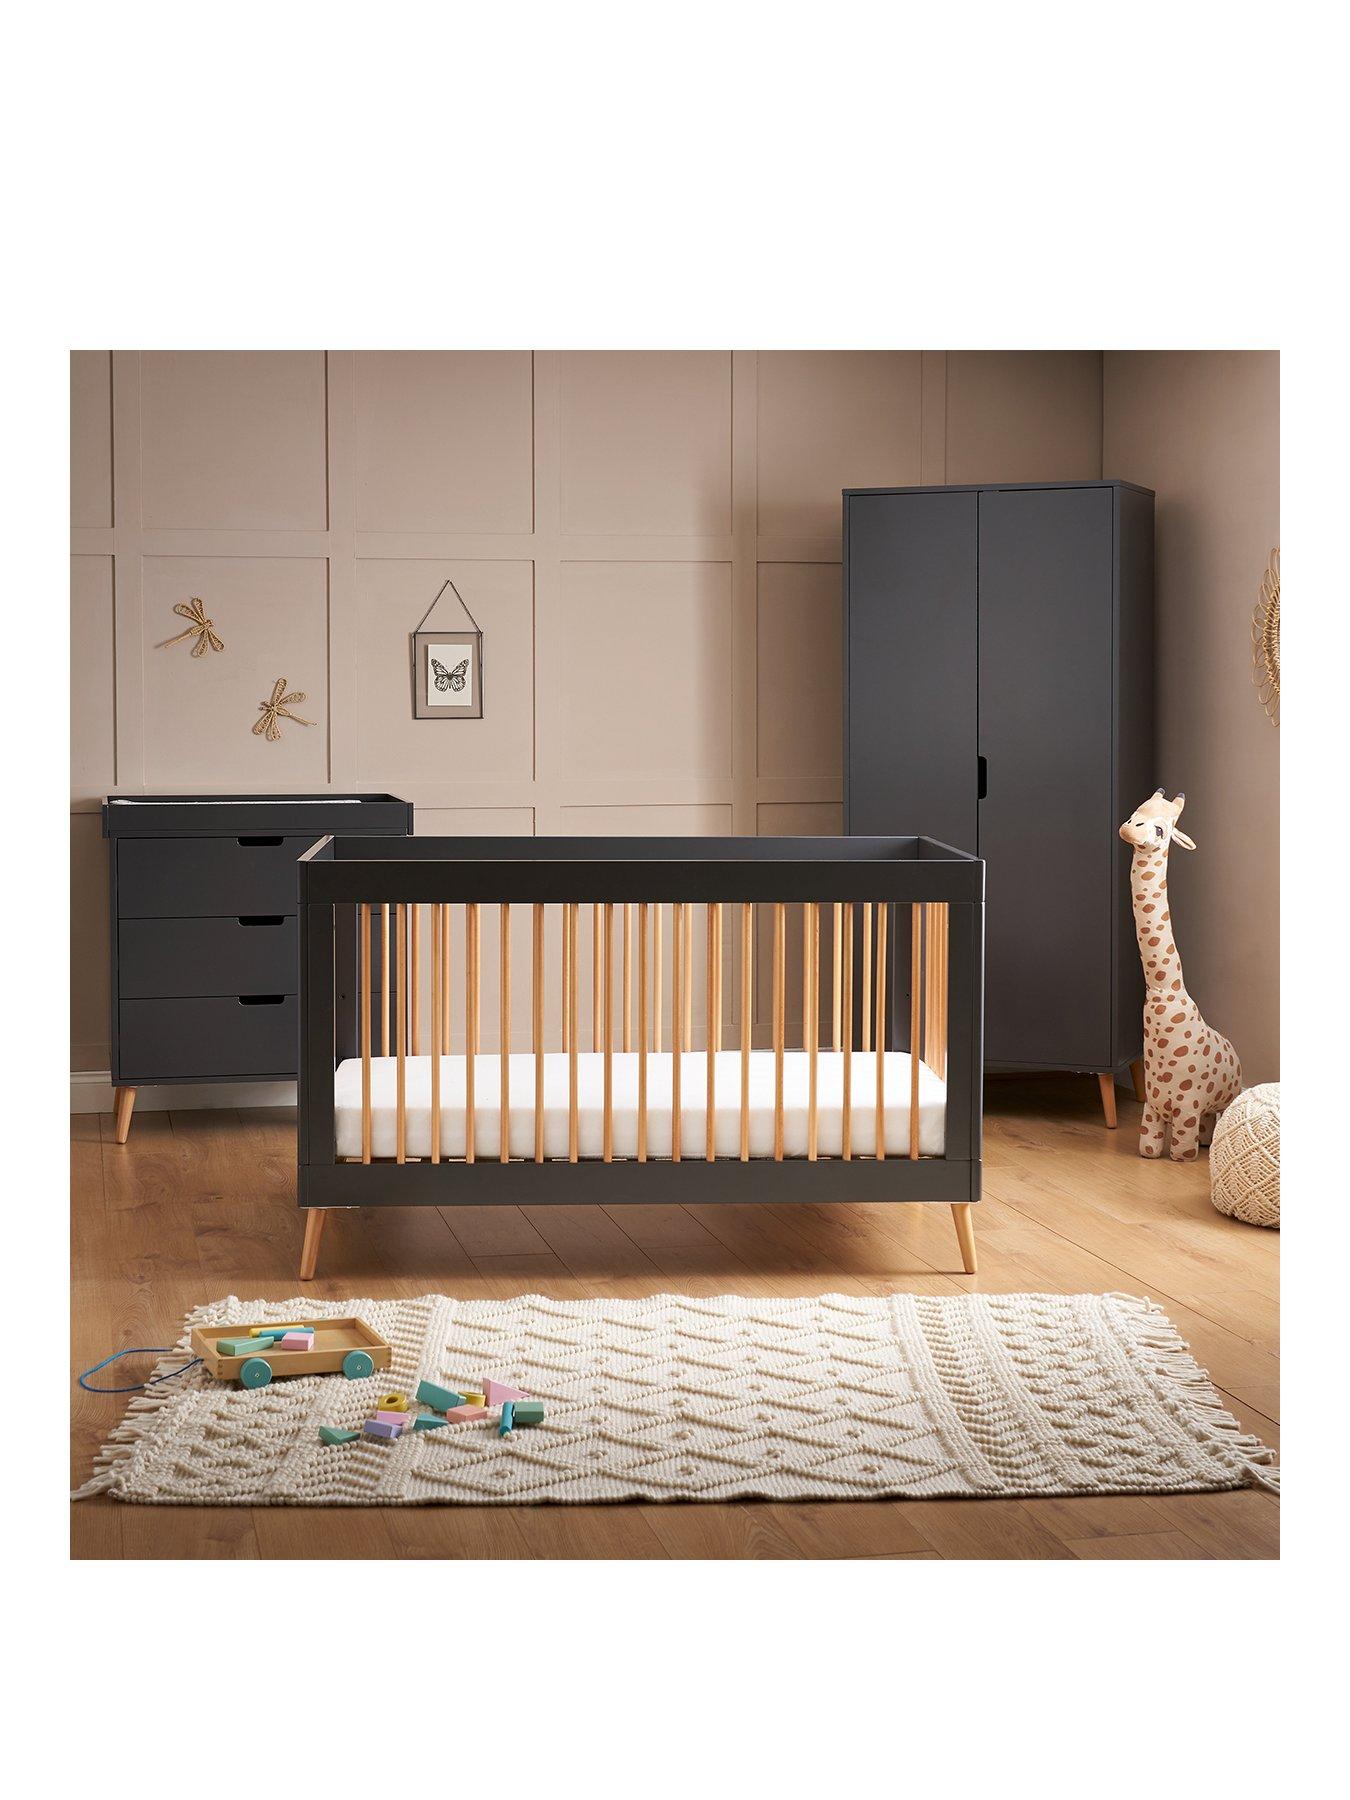 POLKA TOTS Elegant Wooden Rocking Cradle Baby Crib Cot / Kids